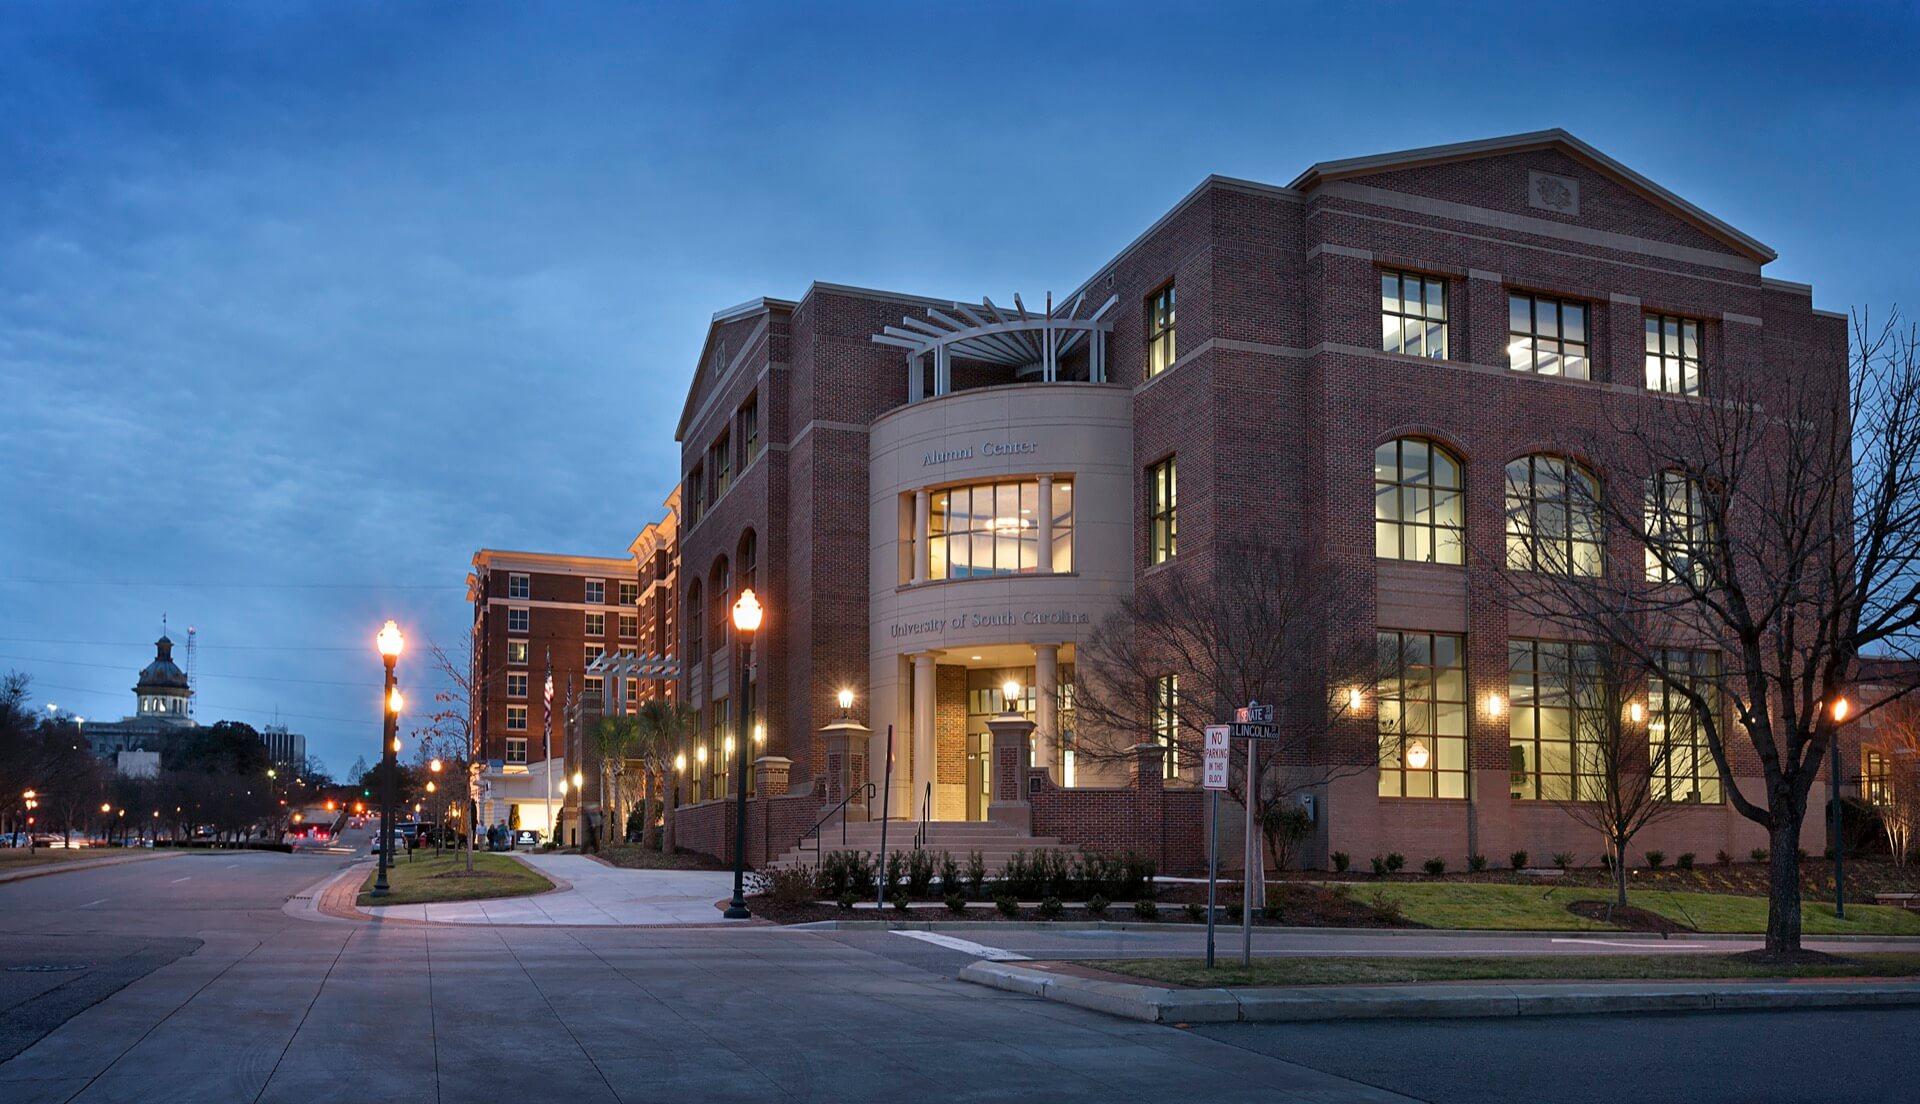 University of South Carolina Alumni Center